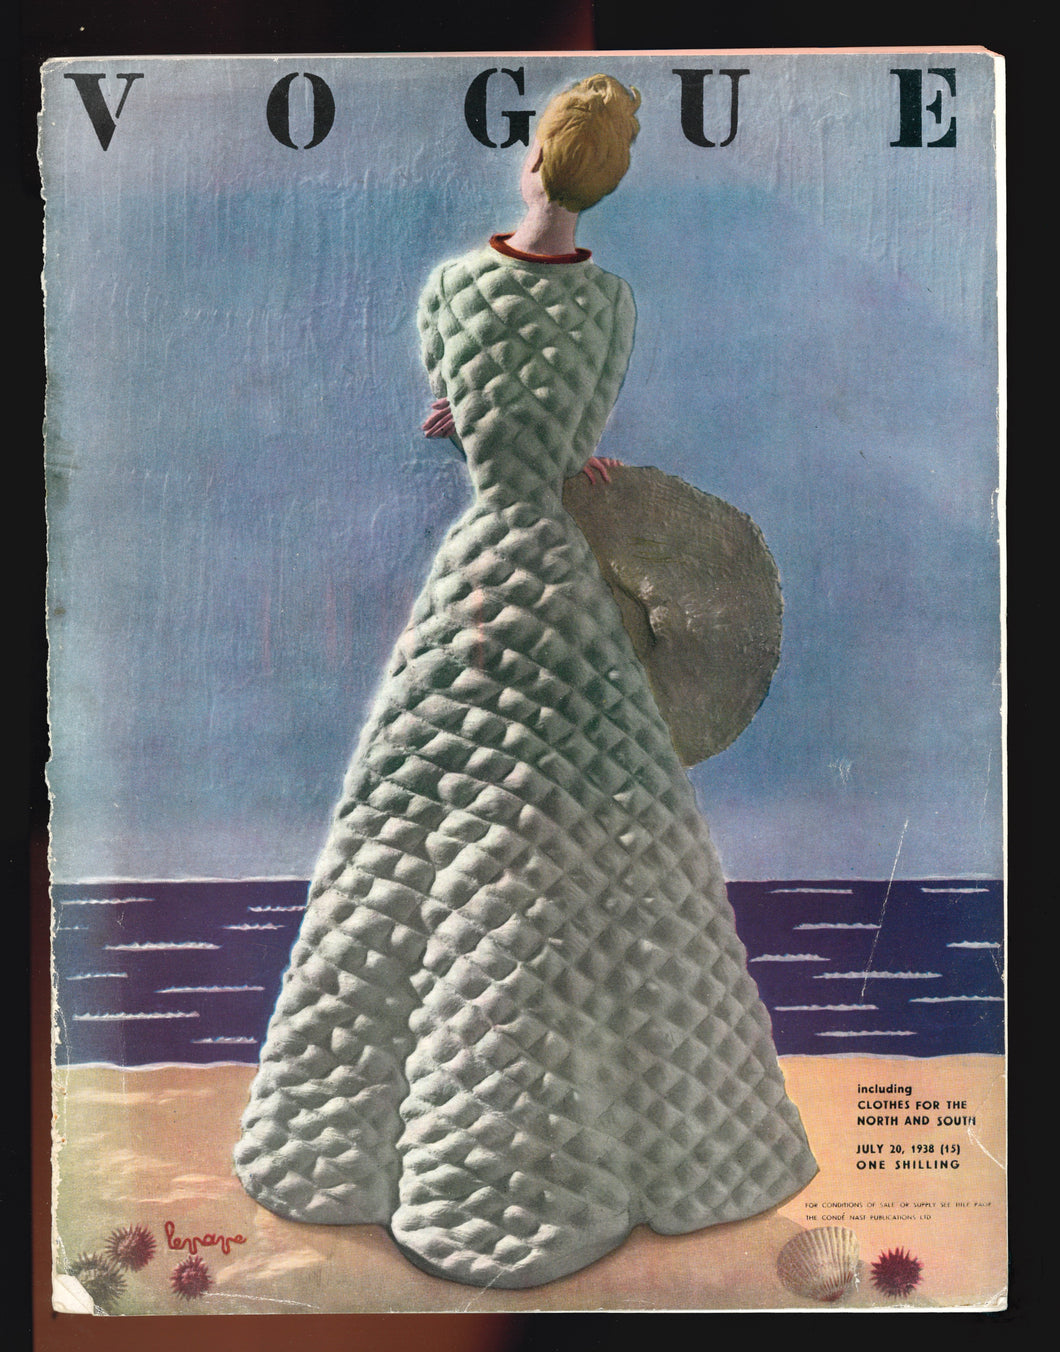 Vogue UK July 20 1938